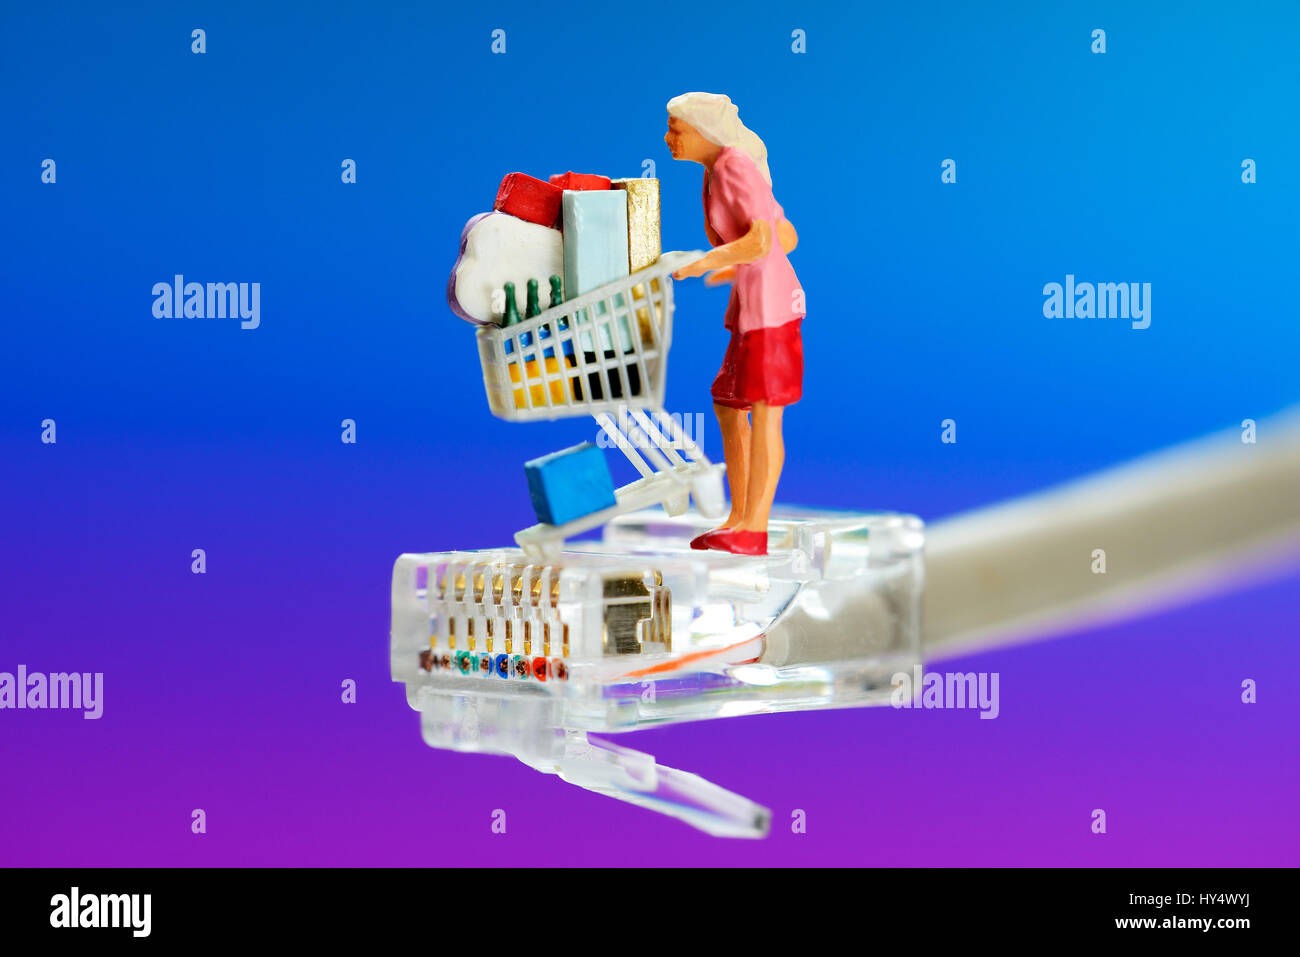 Miniature figure of a woman by shopping cart on Internet cable, symbolic photo on-line shopping, Miniaturfigur einer Frau mit Einkaufswagen auf Intern Stock Photo